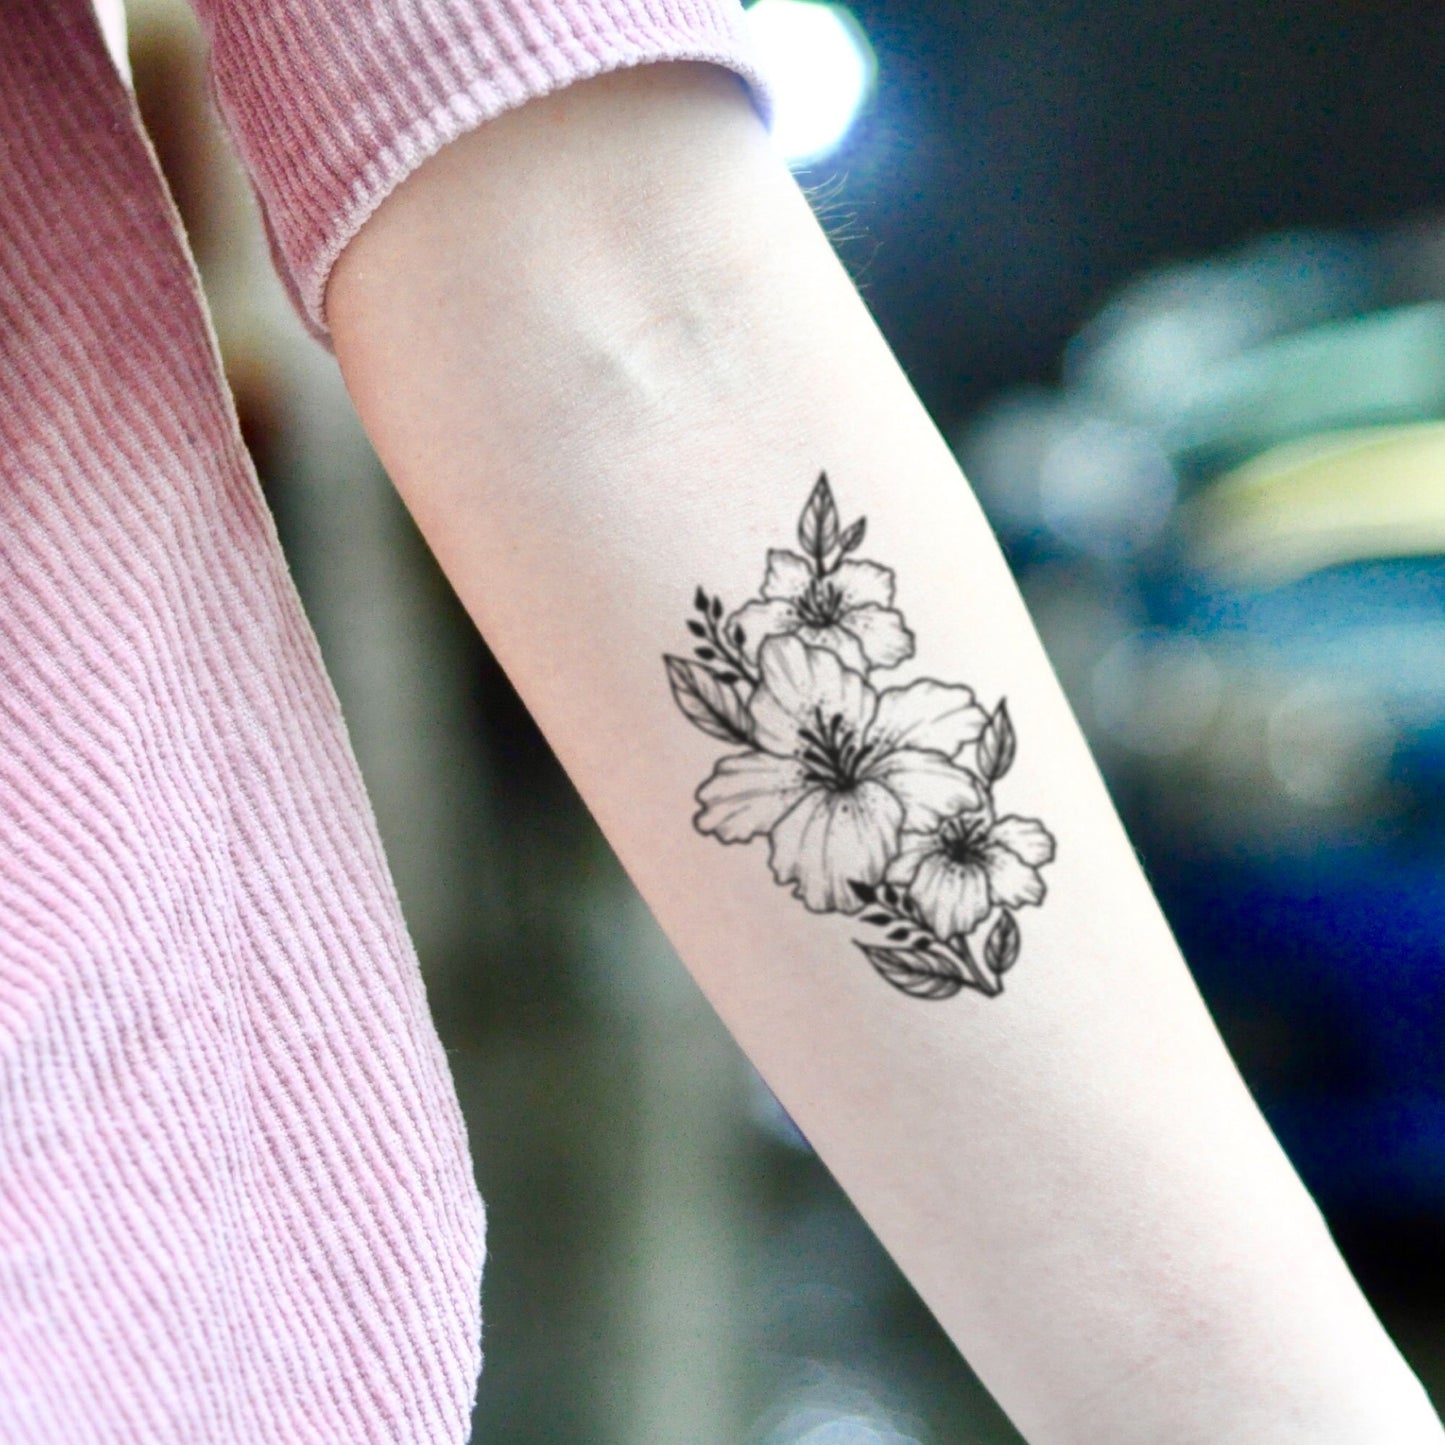 fake small rhododendron flower temporary tattoo sticker design idea on inner arm